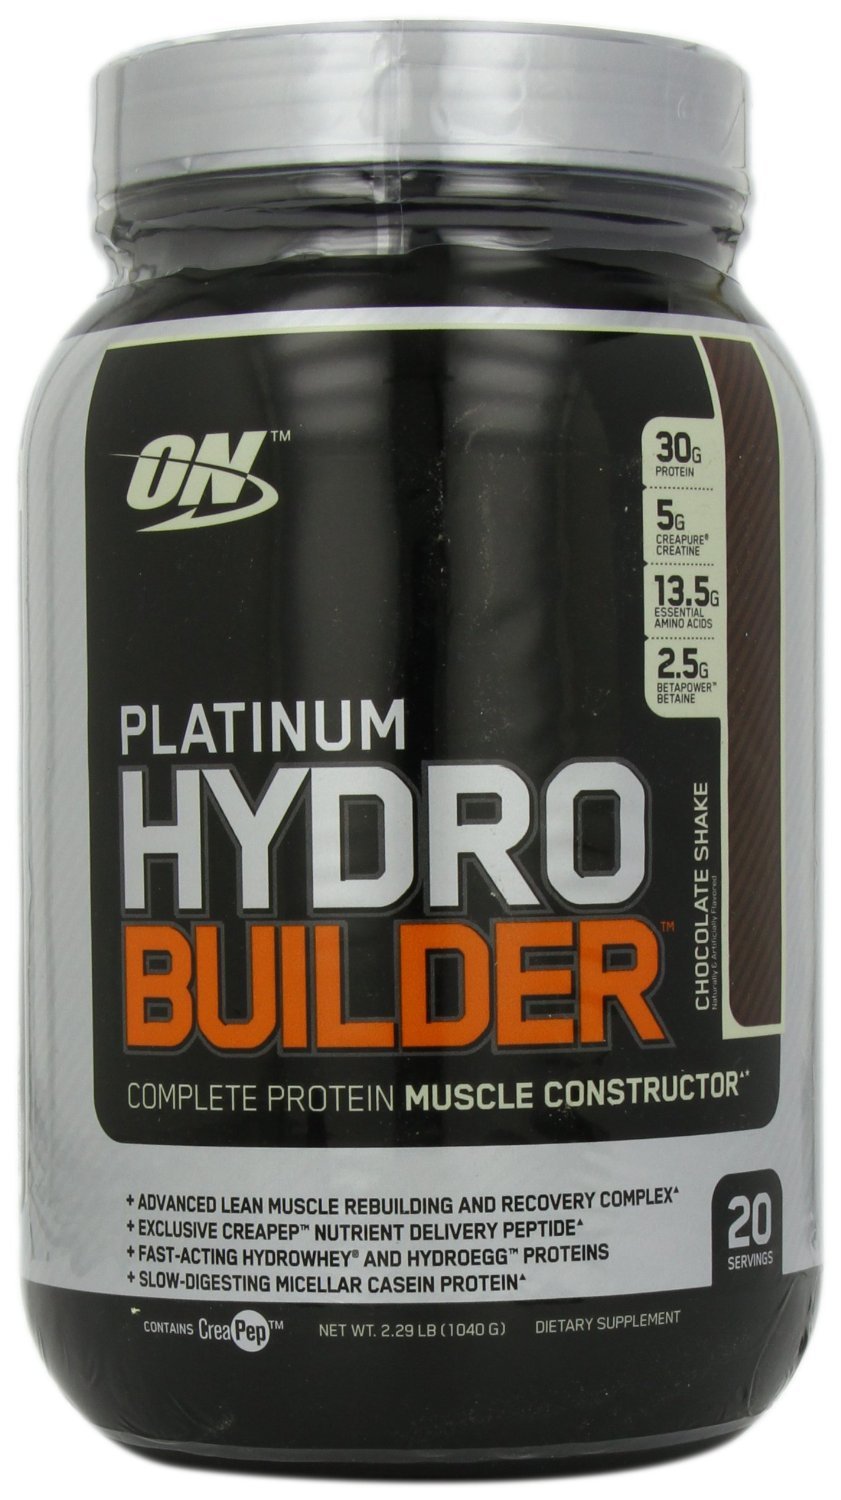 Platinum Hydro Builder, 1040 г, Optimum Nutrition. Комплексный протеин. 